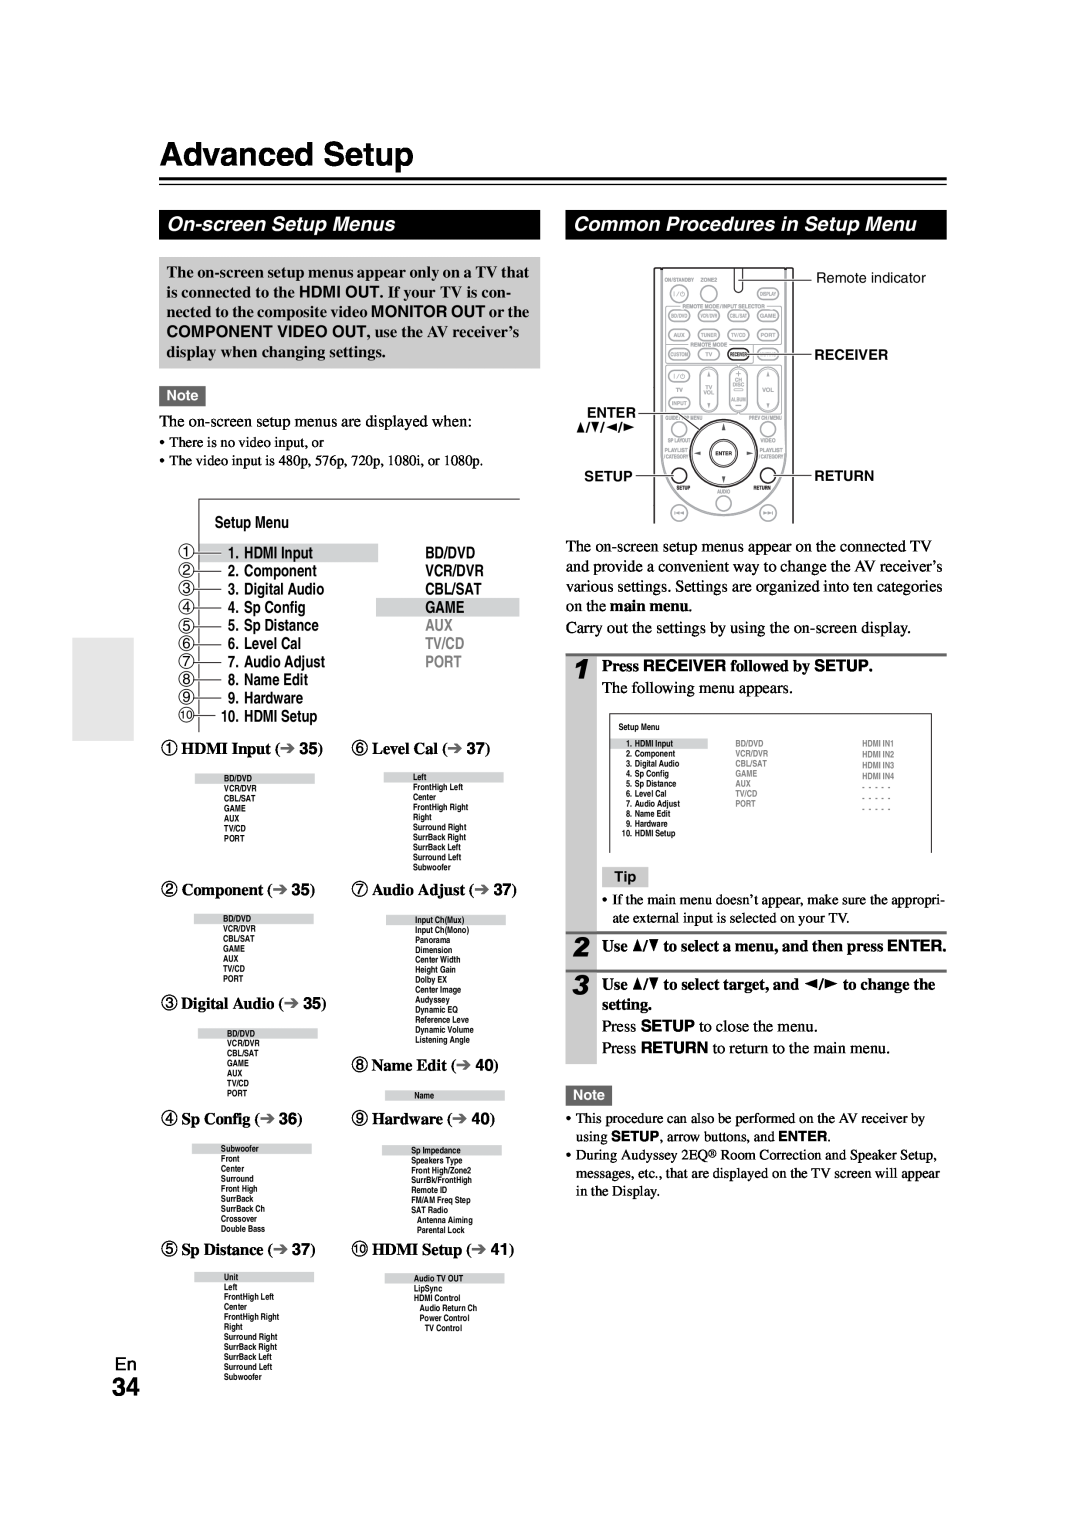 Onkyo TX-SR508 Advanced Setup, On-screenSetup Menus, Common Procedures in Setup Menu, Bd/Dvd Vcr/Dvr Cbl/Sat Game 